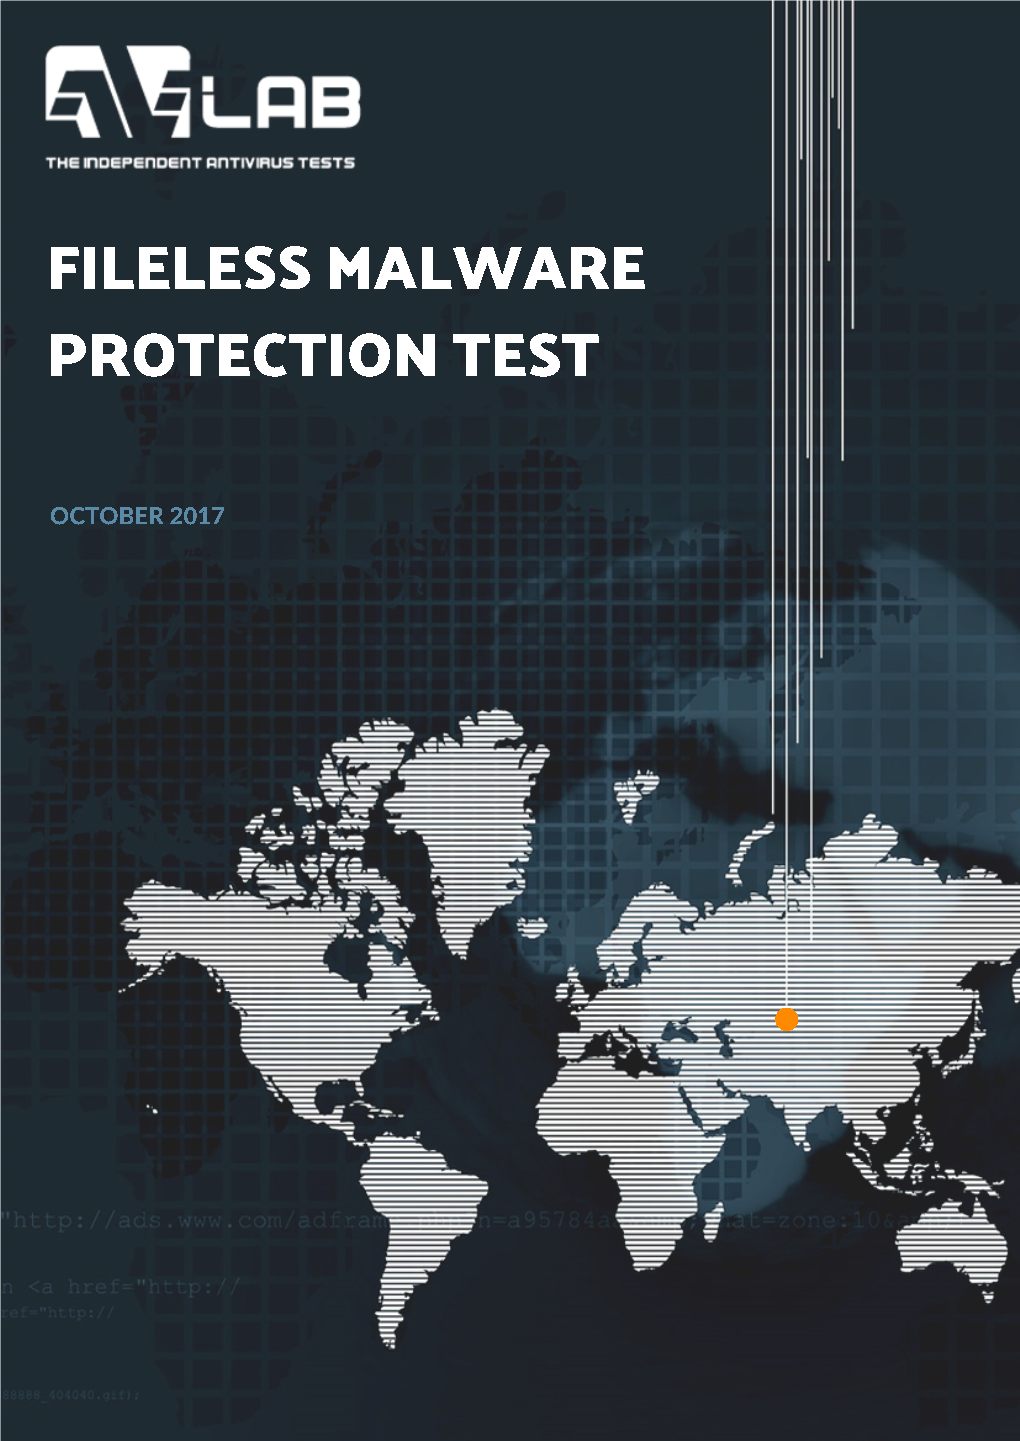 Fileless Malware Protection Test